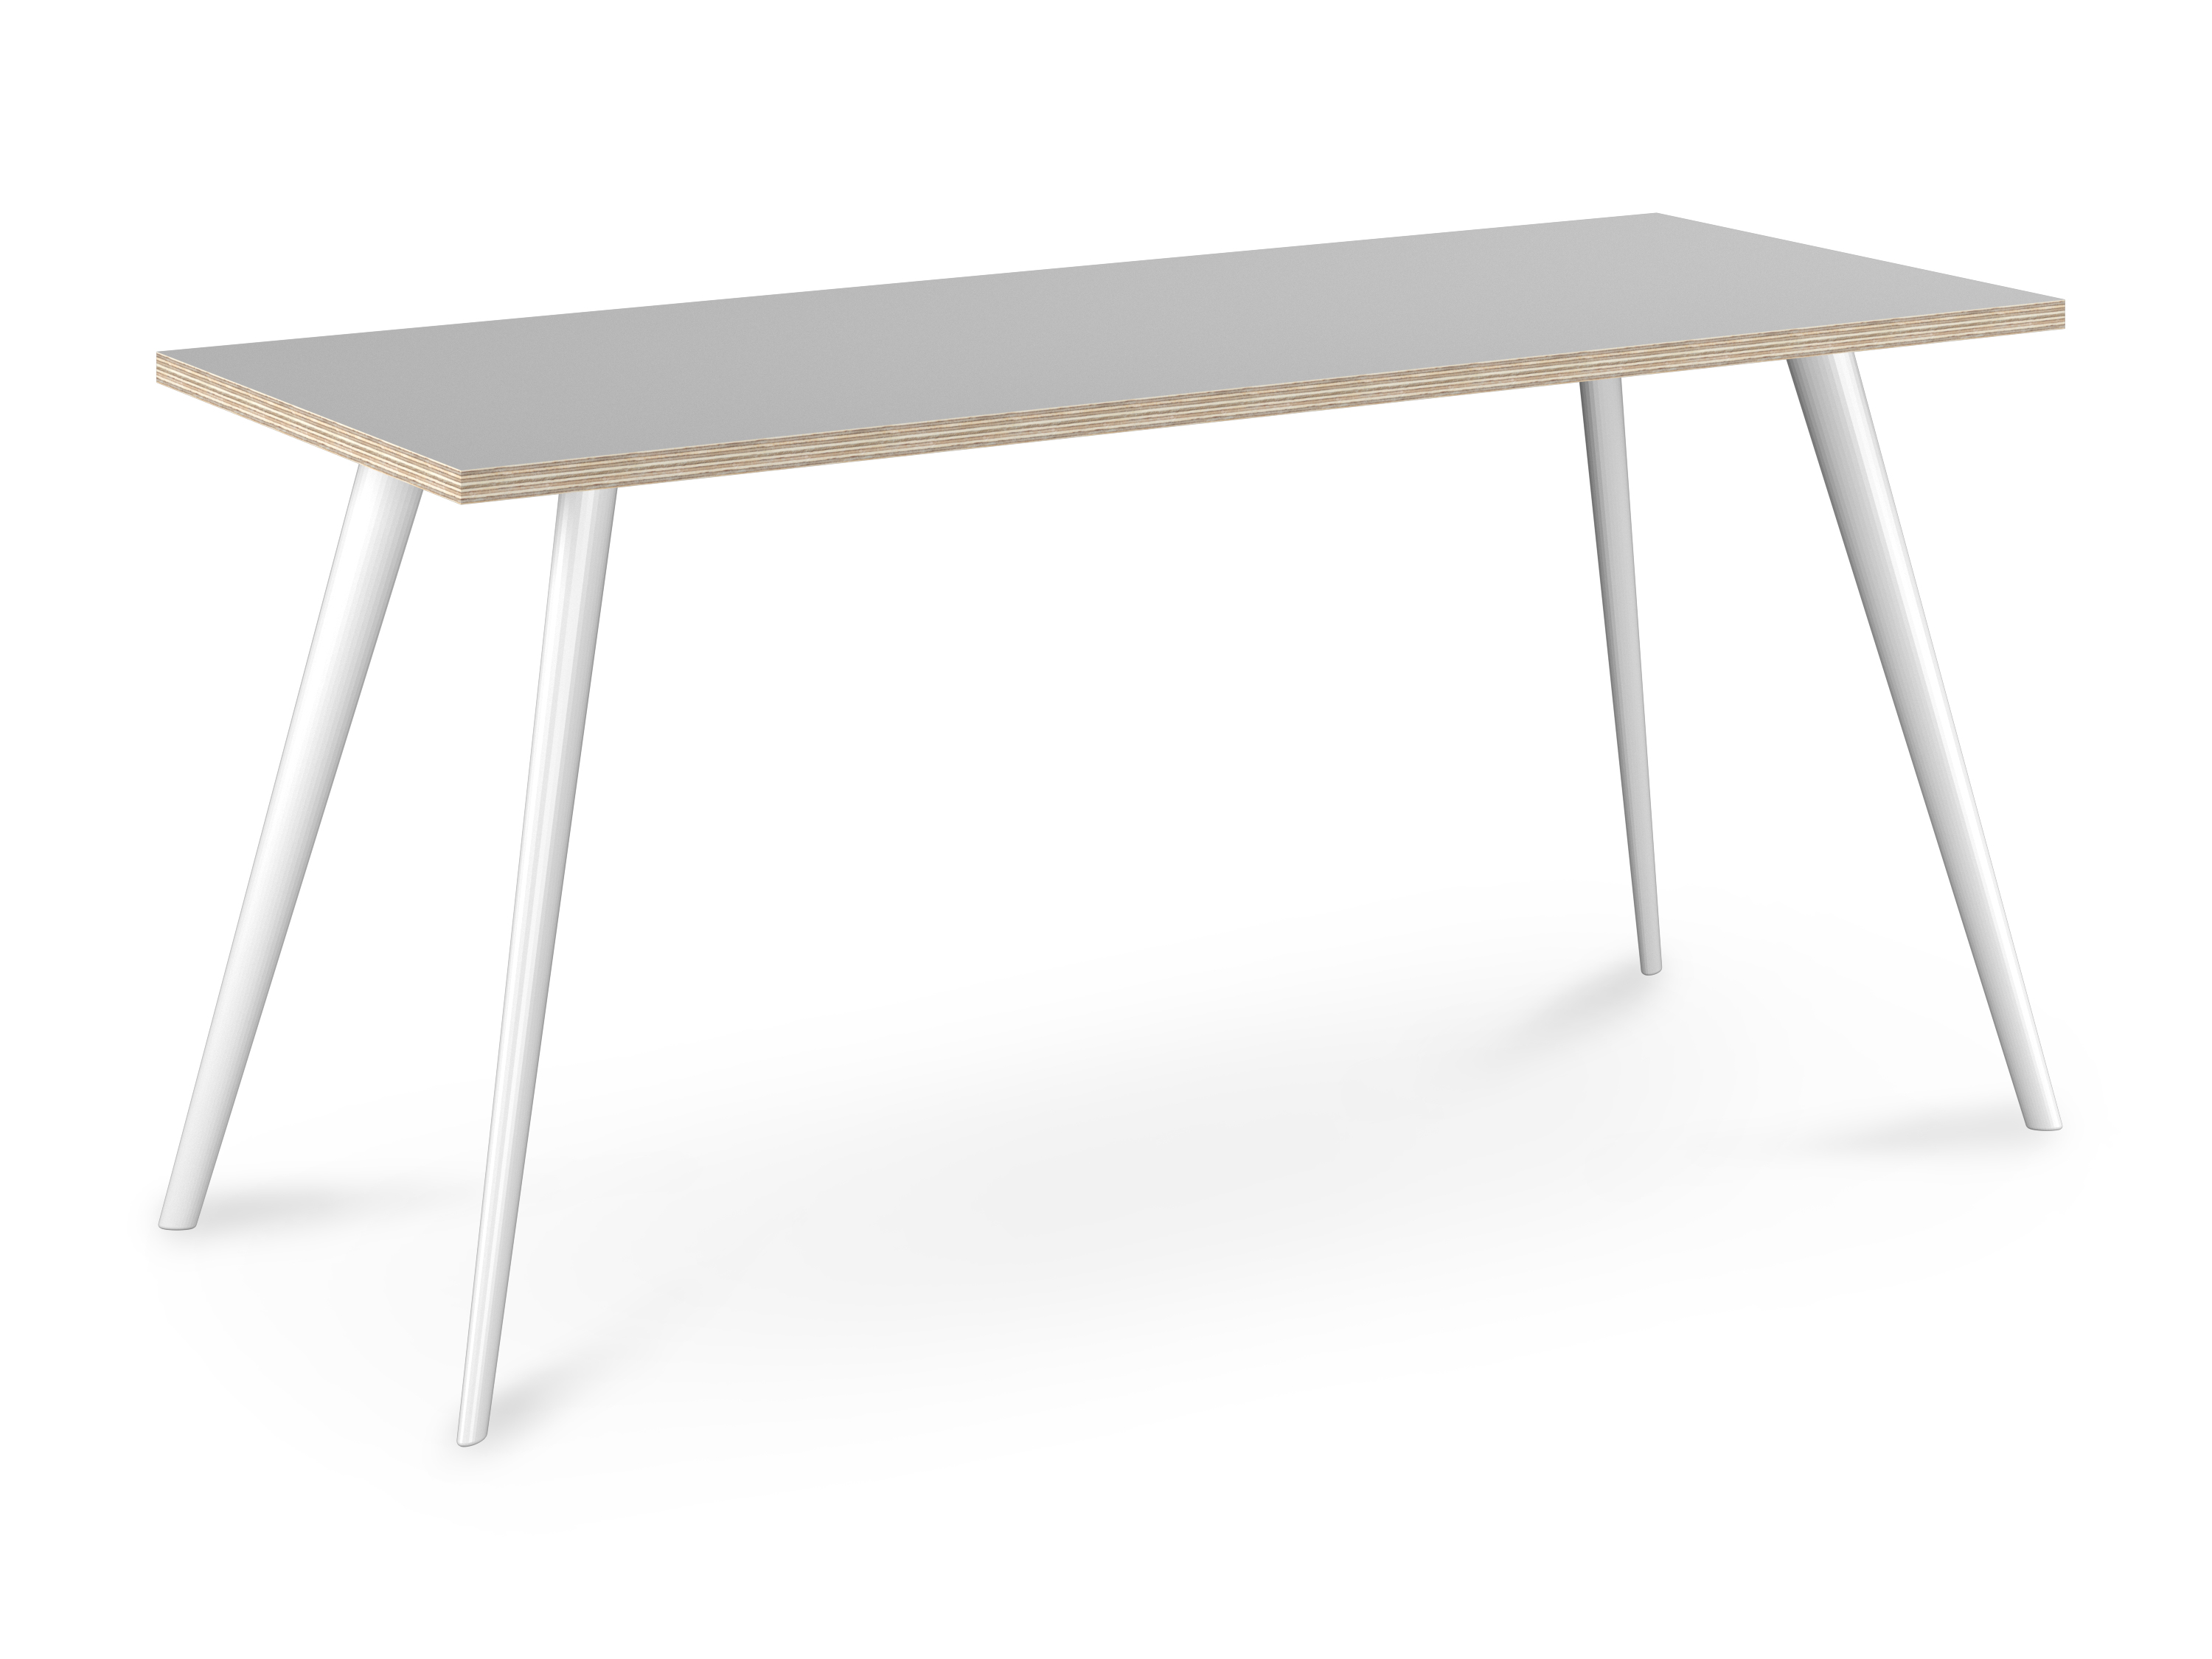 WS - Air desk - White legs, Light Grey Acrylic Ply